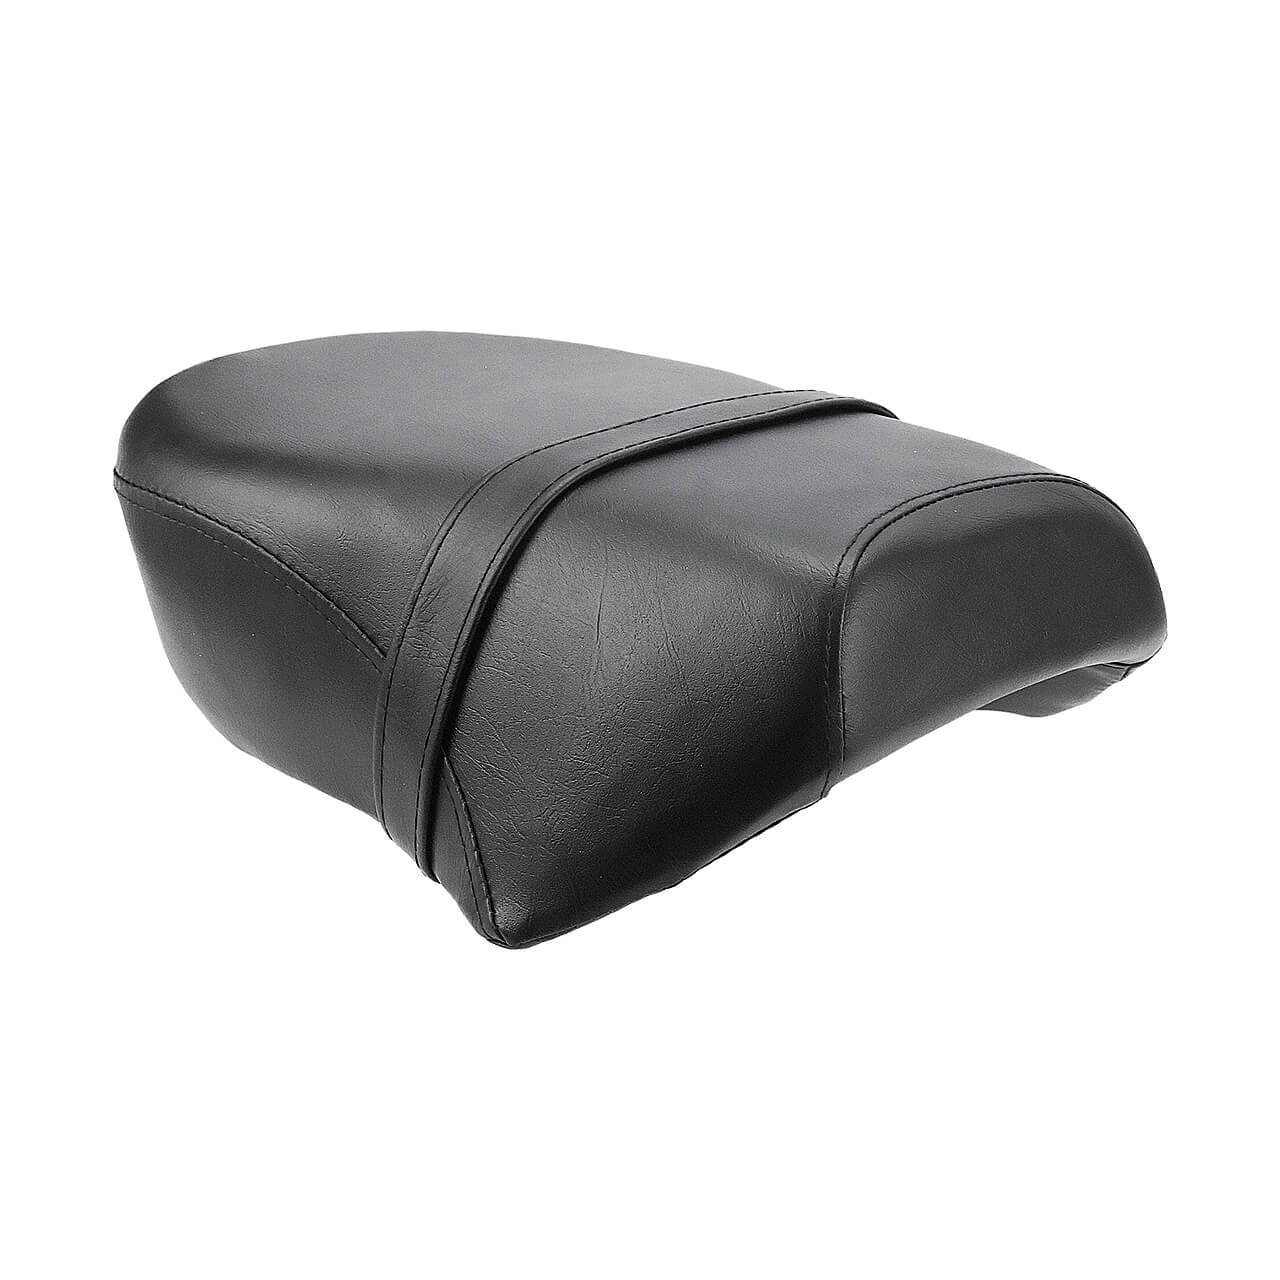 CB009401-mactions-motorcycle-passenger-seat-pillion-pad-for-harley-black